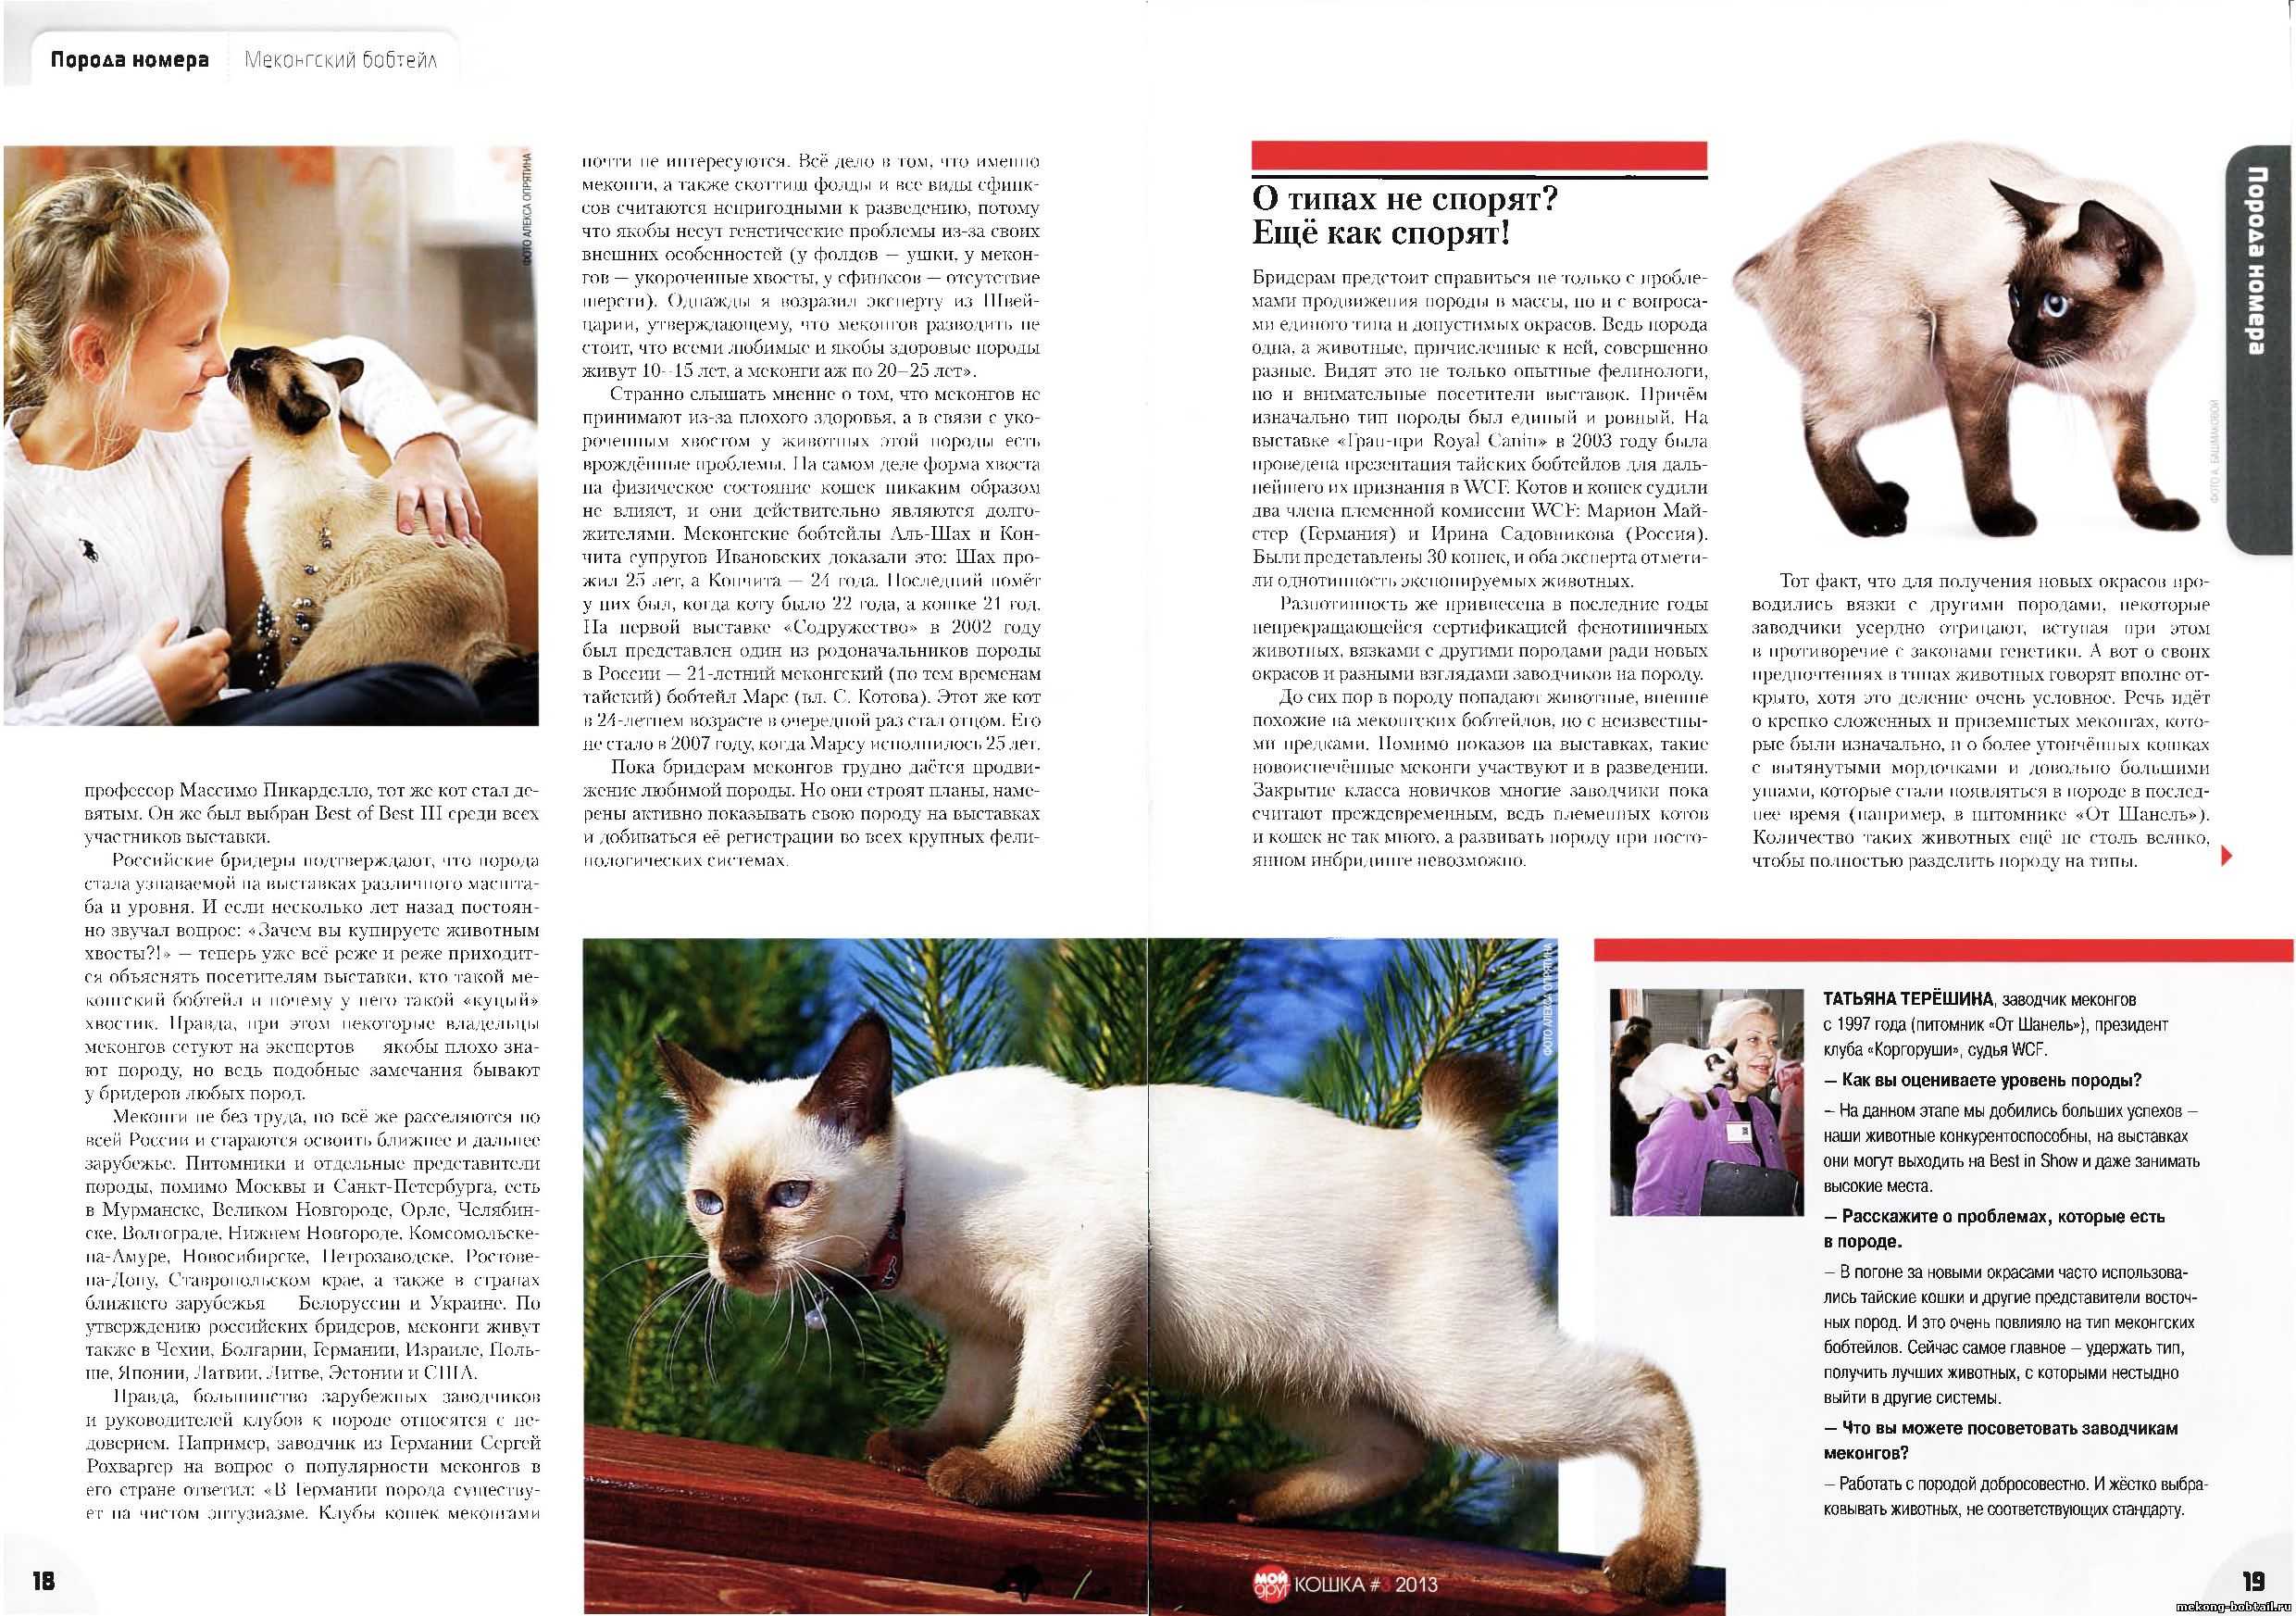 Меконгский бобтейл - описание породы: фото кошек, стандарты, окрасы, характер